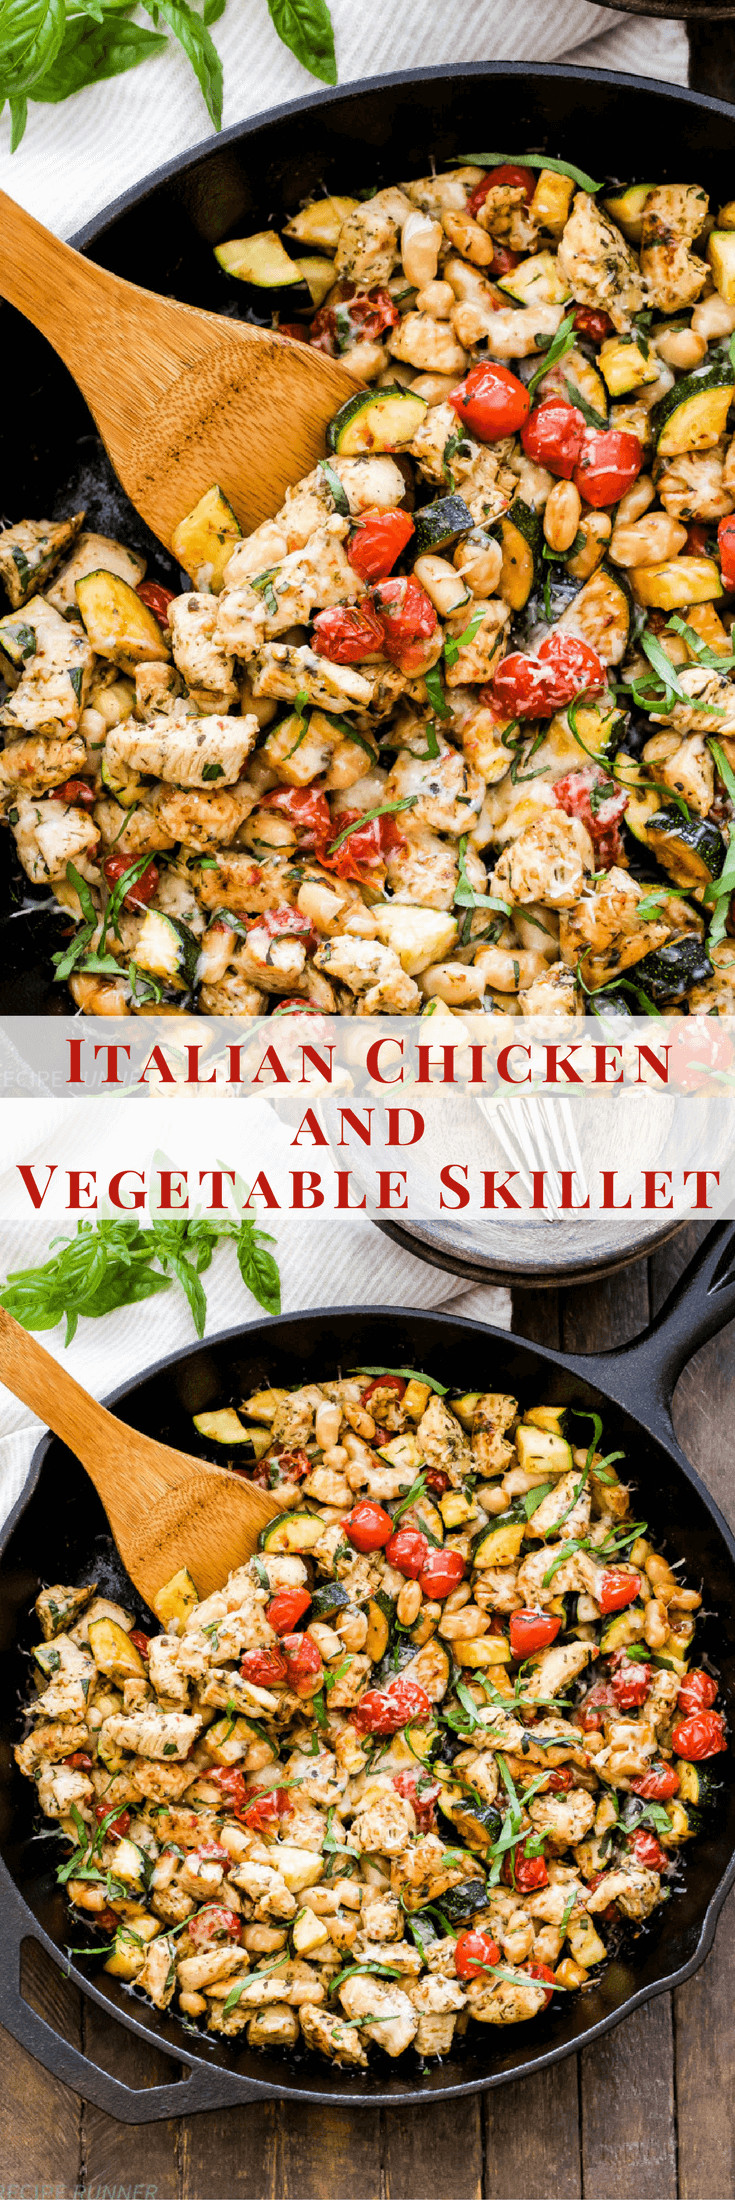 Italian Vegetable Recipes
 Italian Chicken and Ve able Skillet Recipe Runner